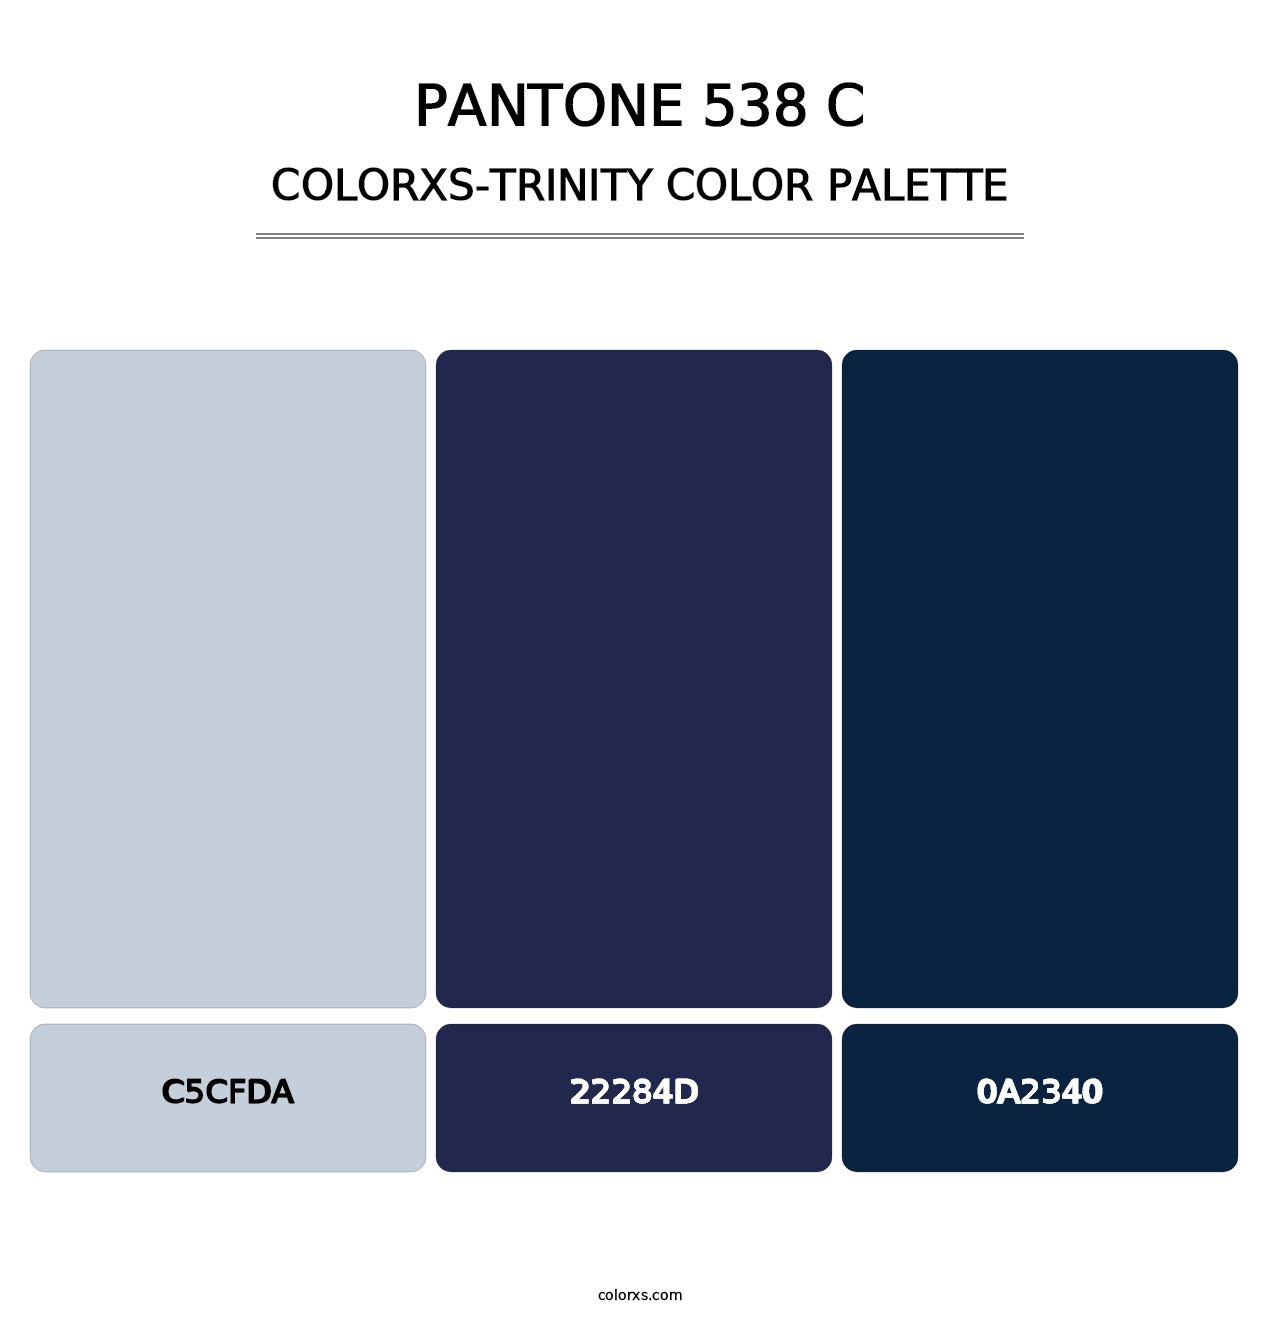 PANTONE 538 C - Colorxs Trinity Palette